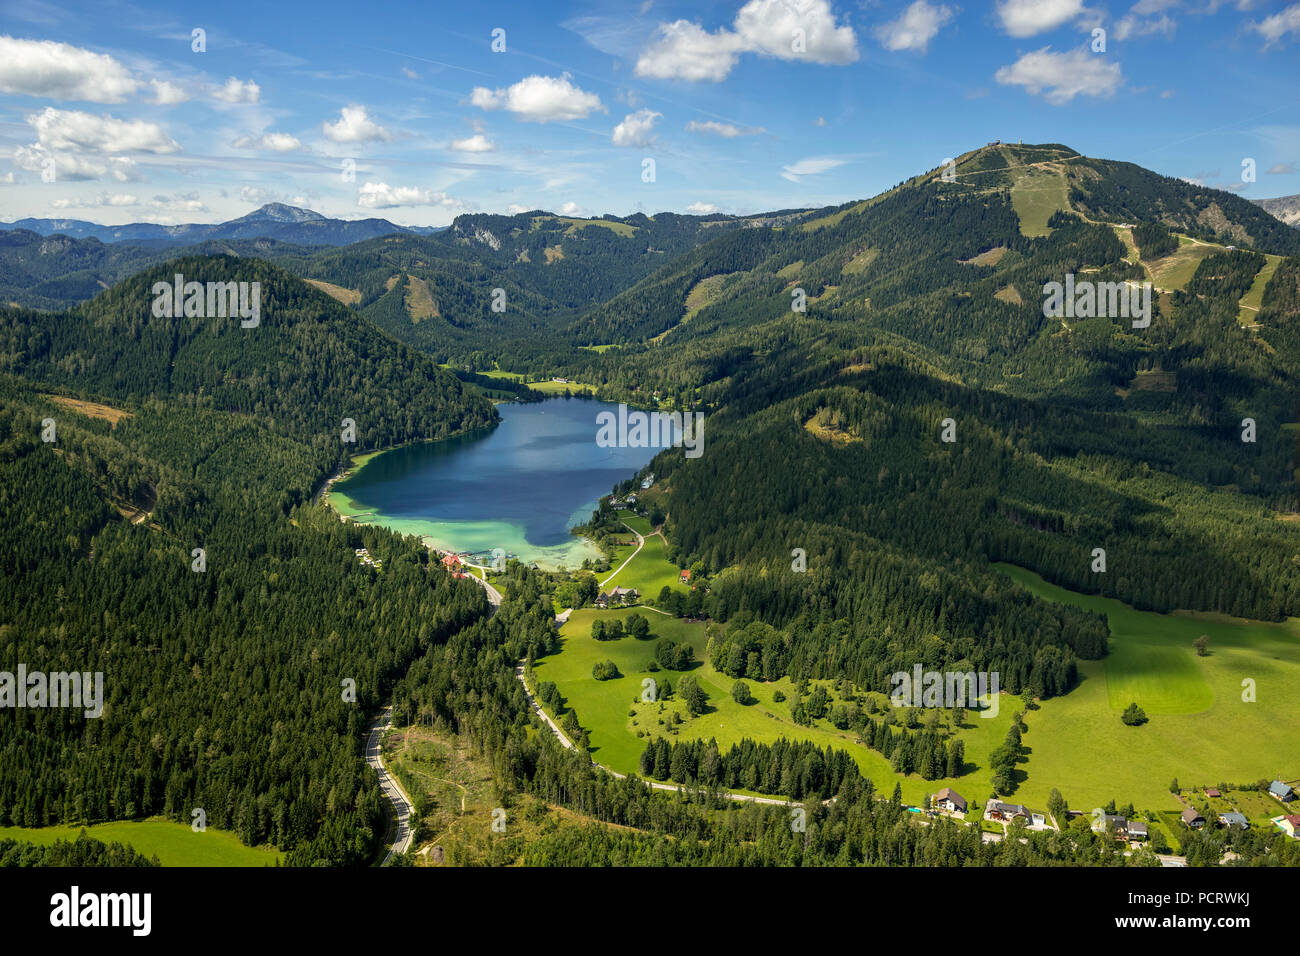 Aerial view, Erlaufsee with Gemeindealpe, Sankt Sebastian, Alpenflug (aviation company), Styria, Austria Stock Photo